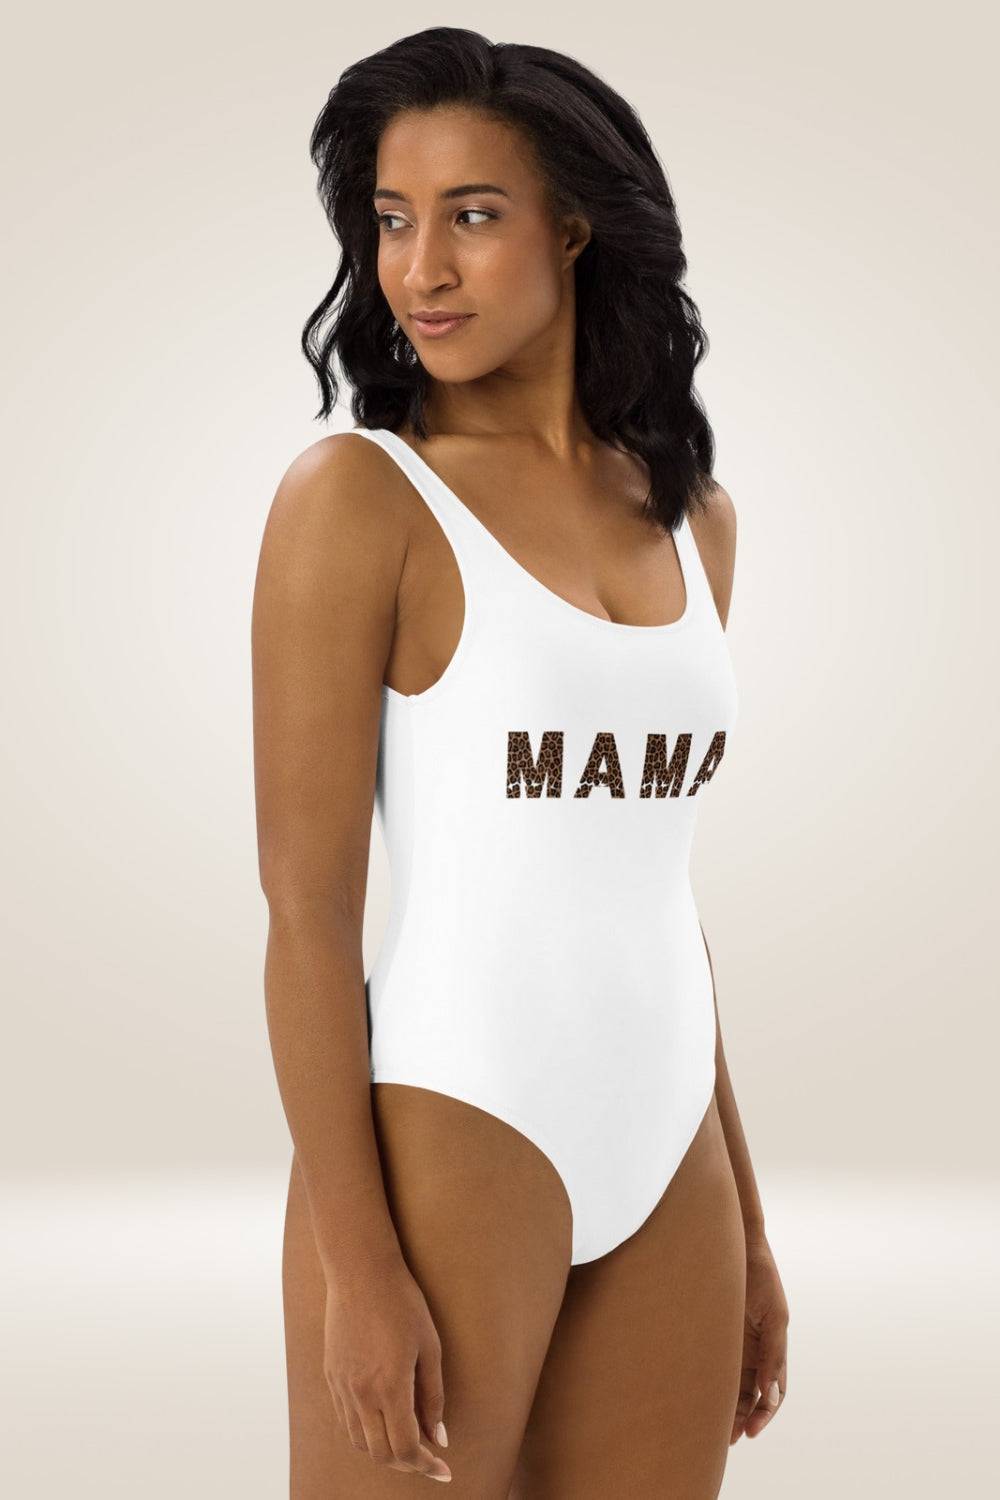 Leopard Print Mama White One Piece Swimsuit - TGC Boutique - One Piece Swimsuit